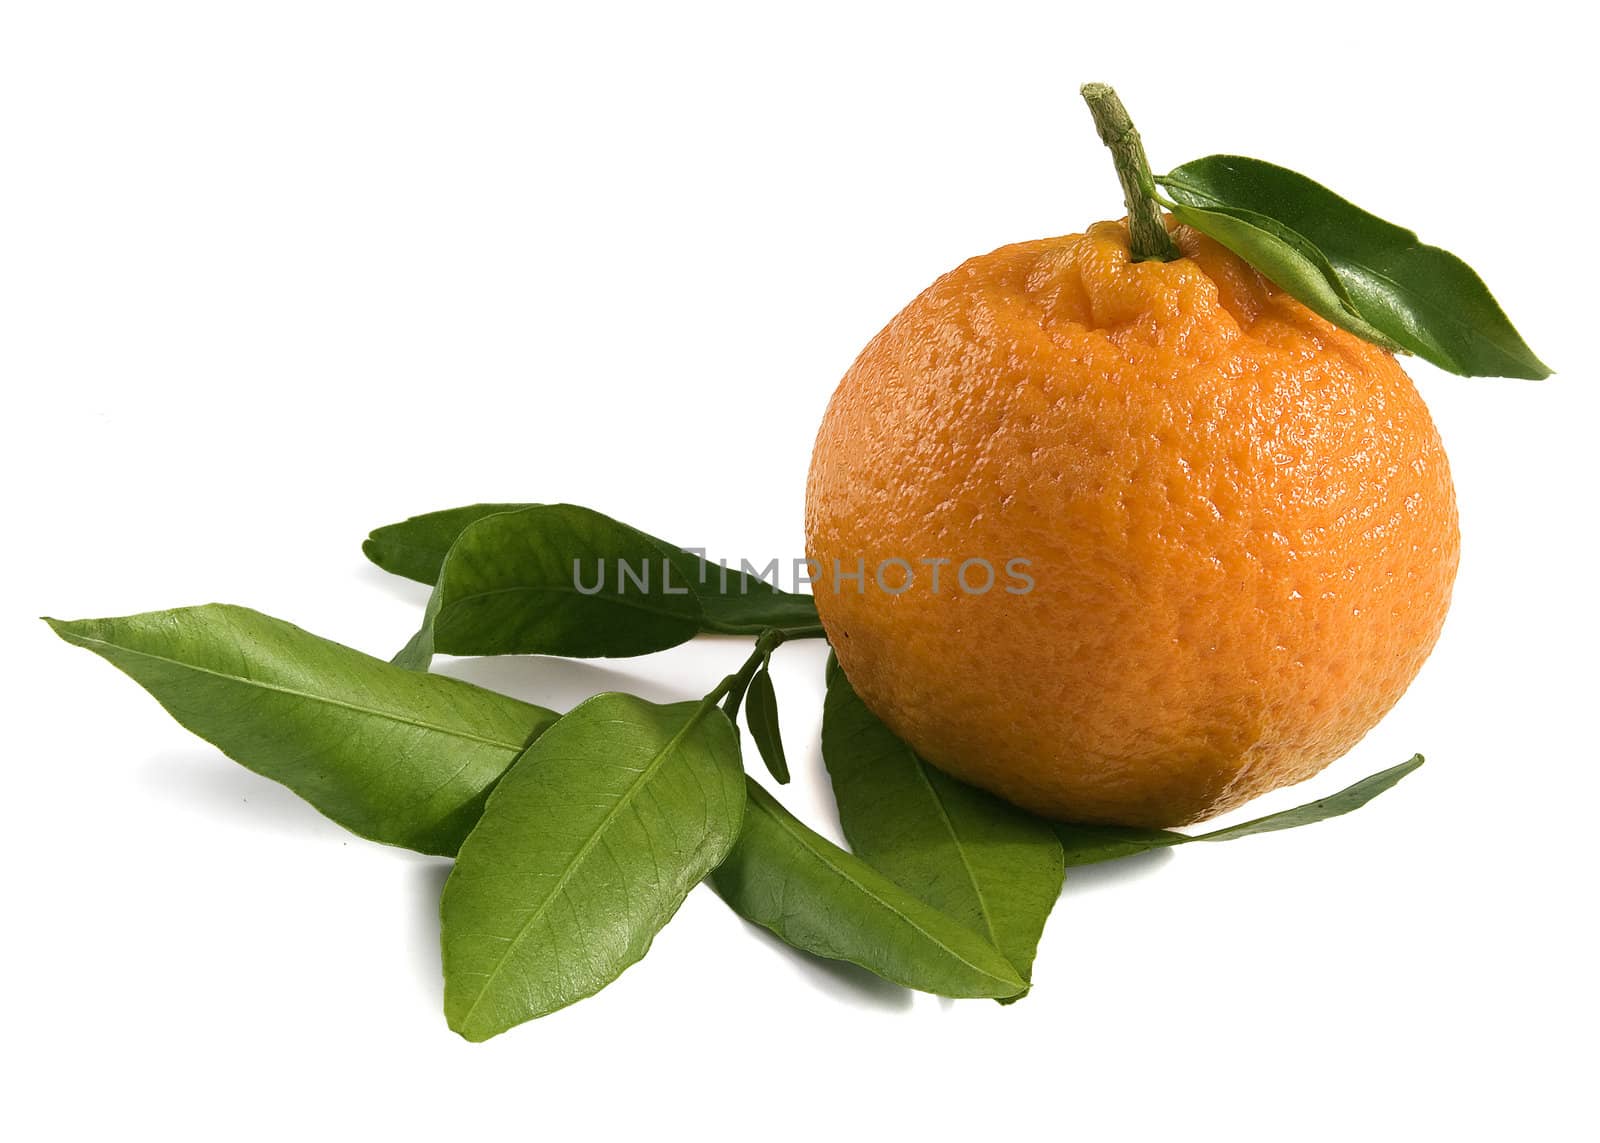 One orange tangerine on the green fresh tangerine's leafs